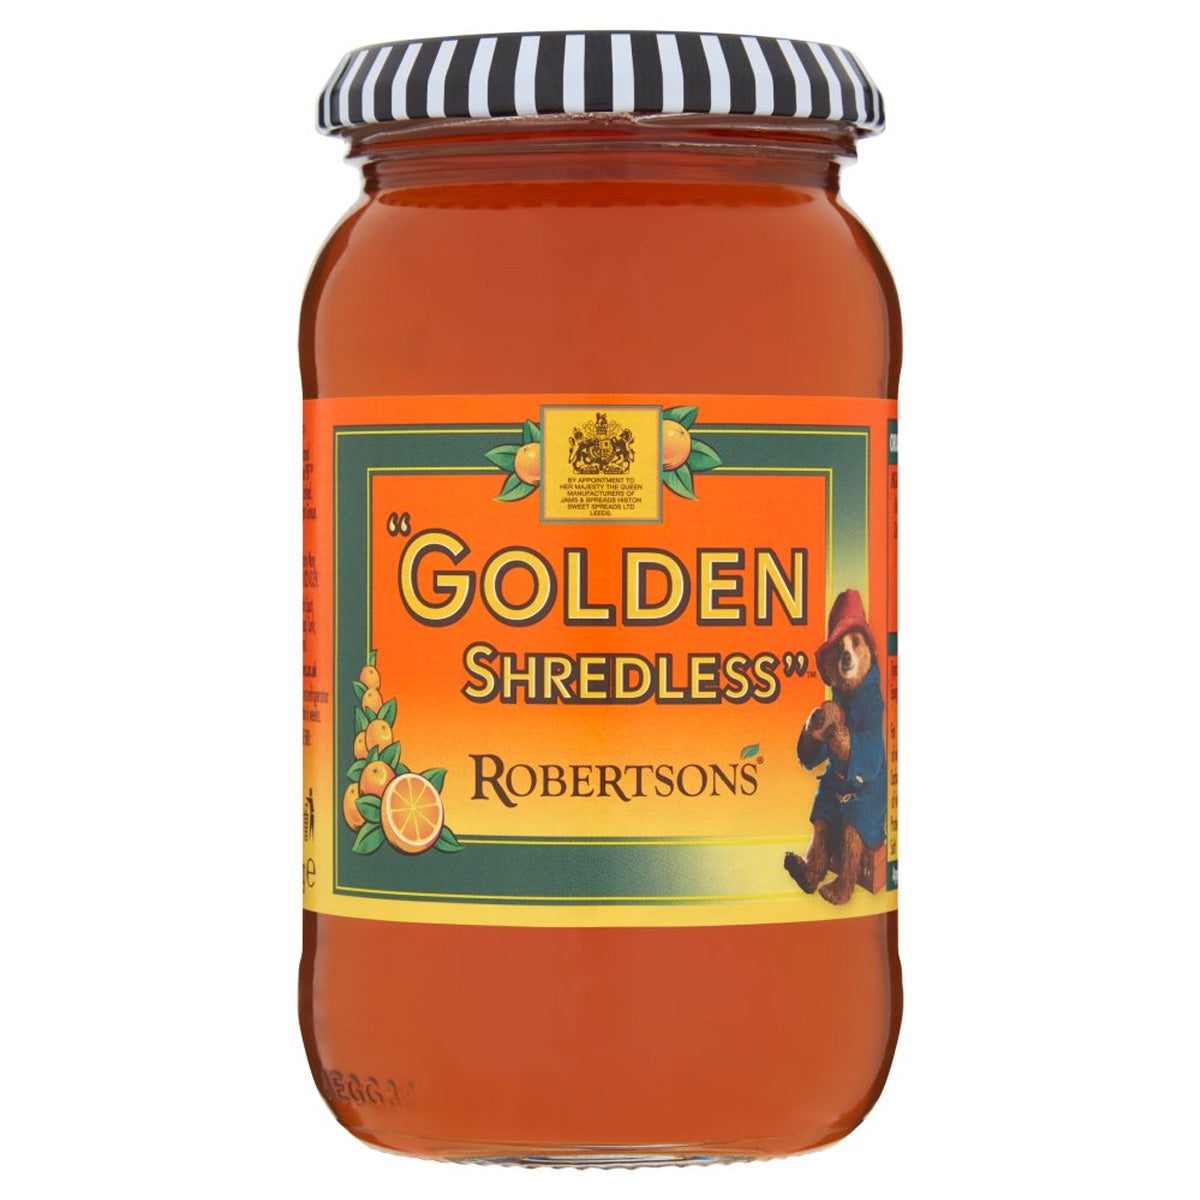 The Robertsons - Golden Shredless - 454g robertson.